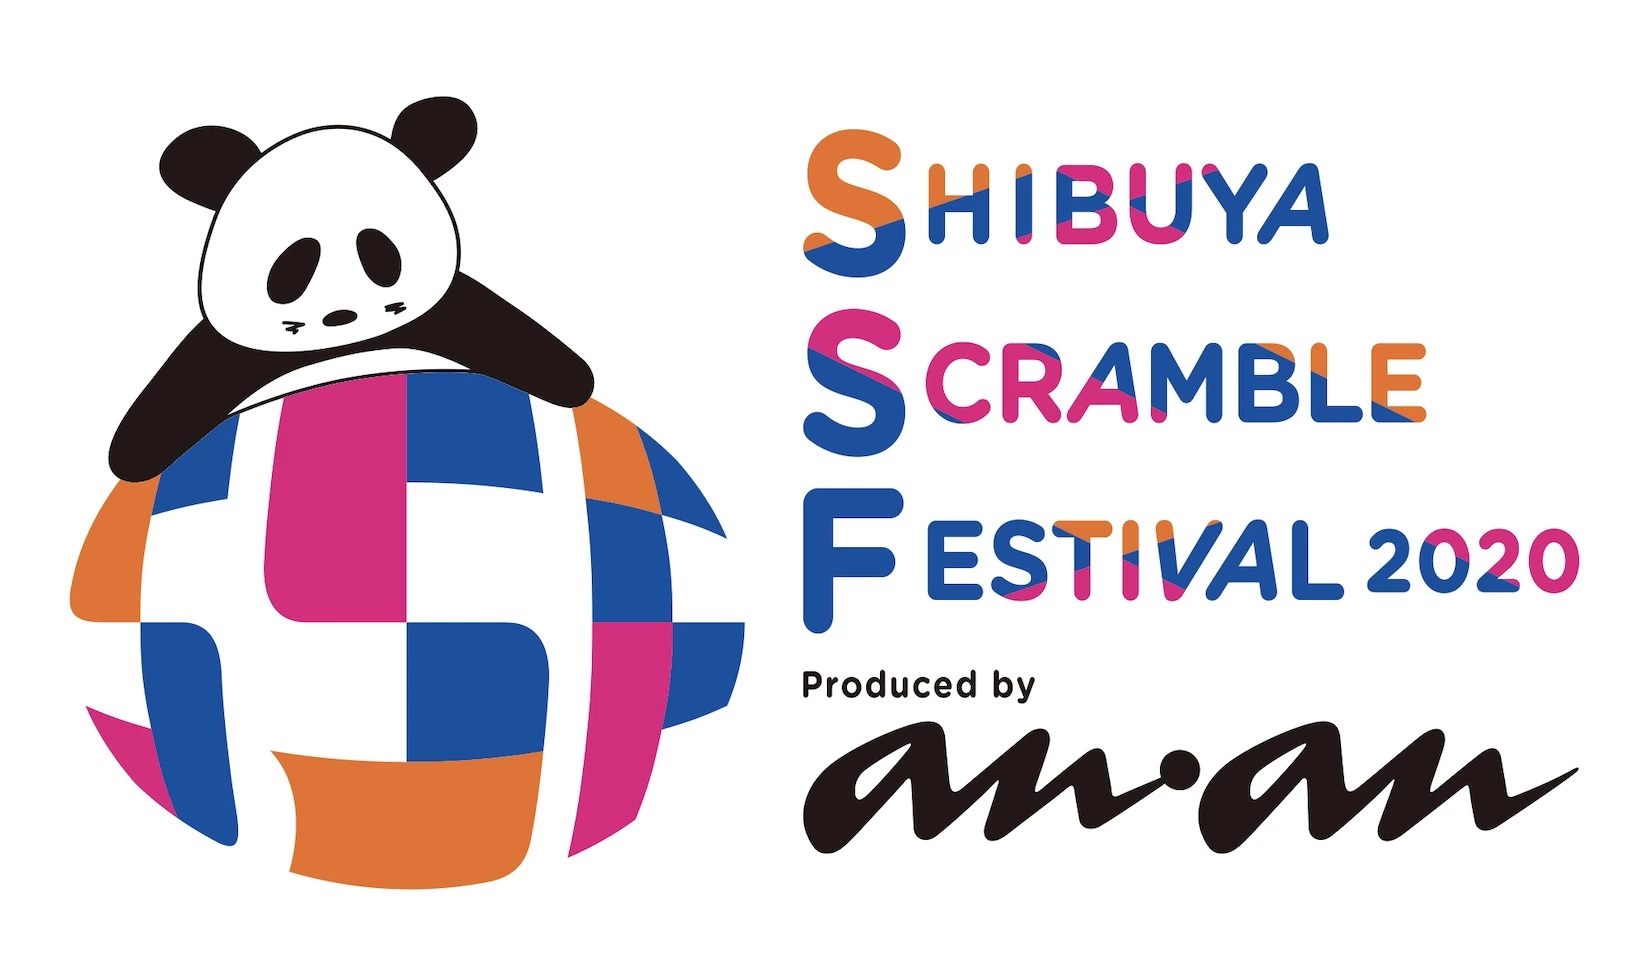 SHIBUYA SCRAMBLE FESTIVAL 2020 Produced by anan